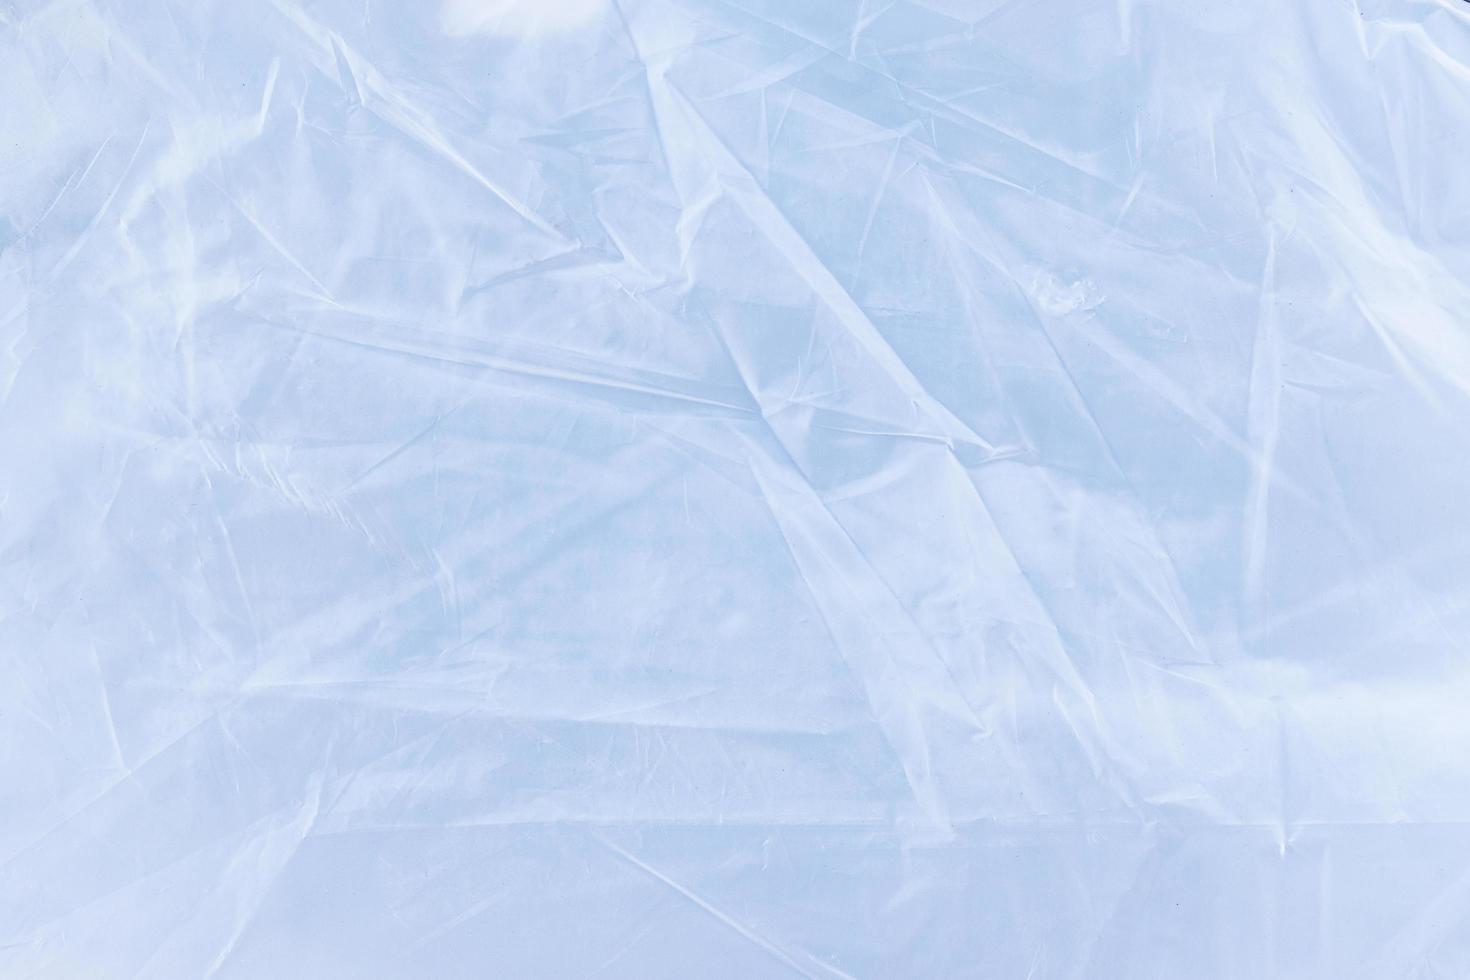 Texture wrinkled plastic bag background photo